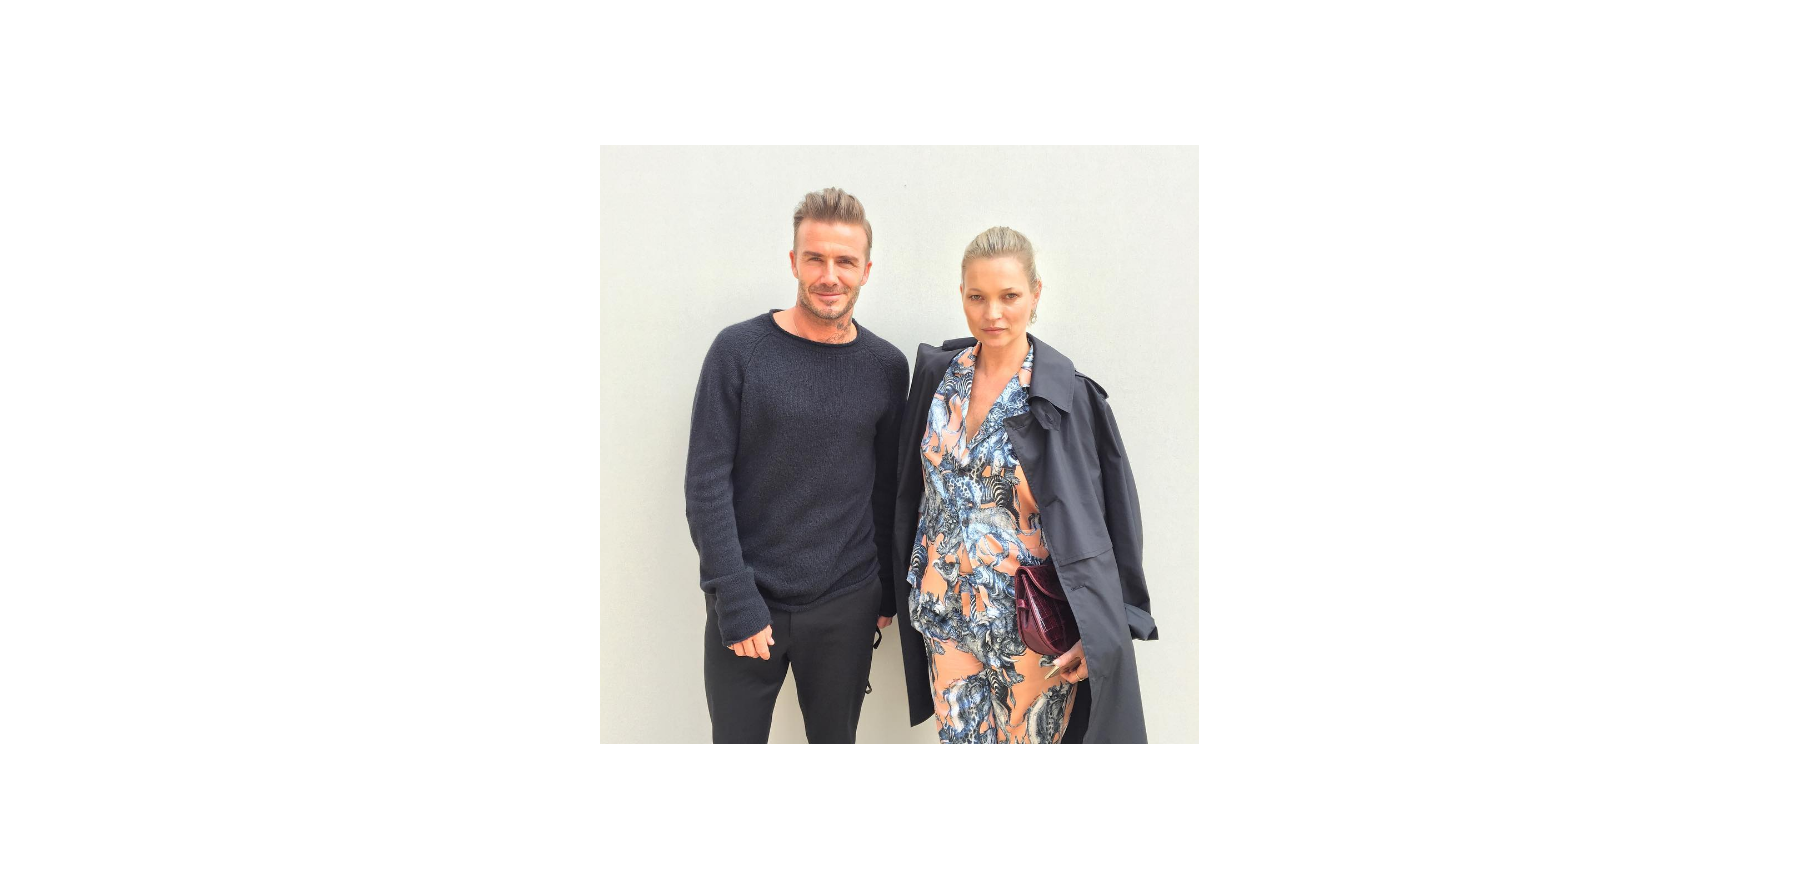 David Beckham and Kate Moss Sit Front-Row at Louis Vuitton